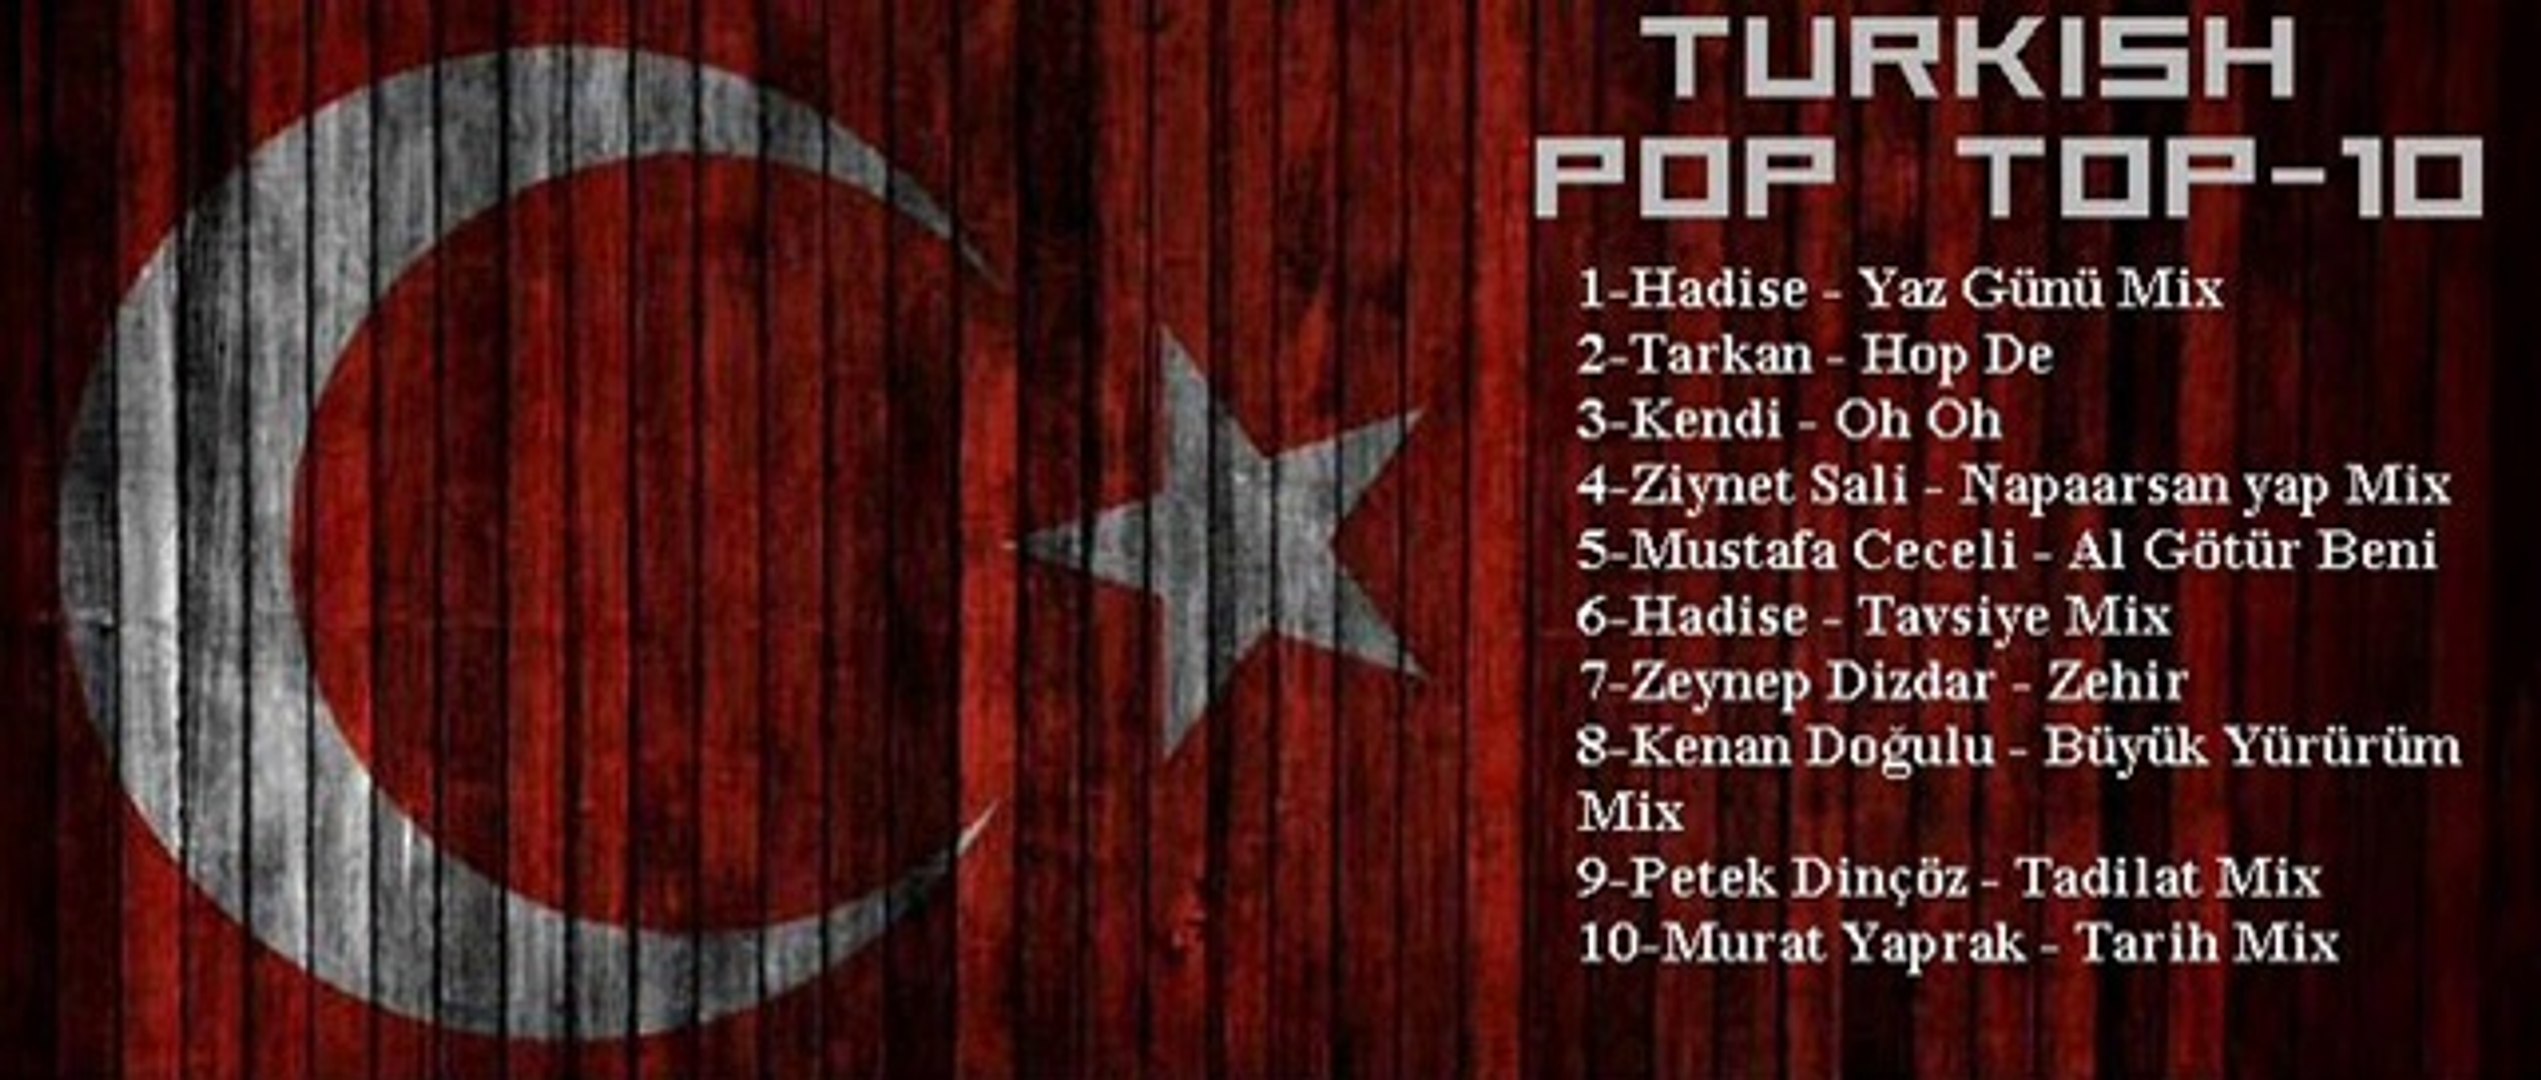 Turkish Pop Top 10 - Dailymotion Video